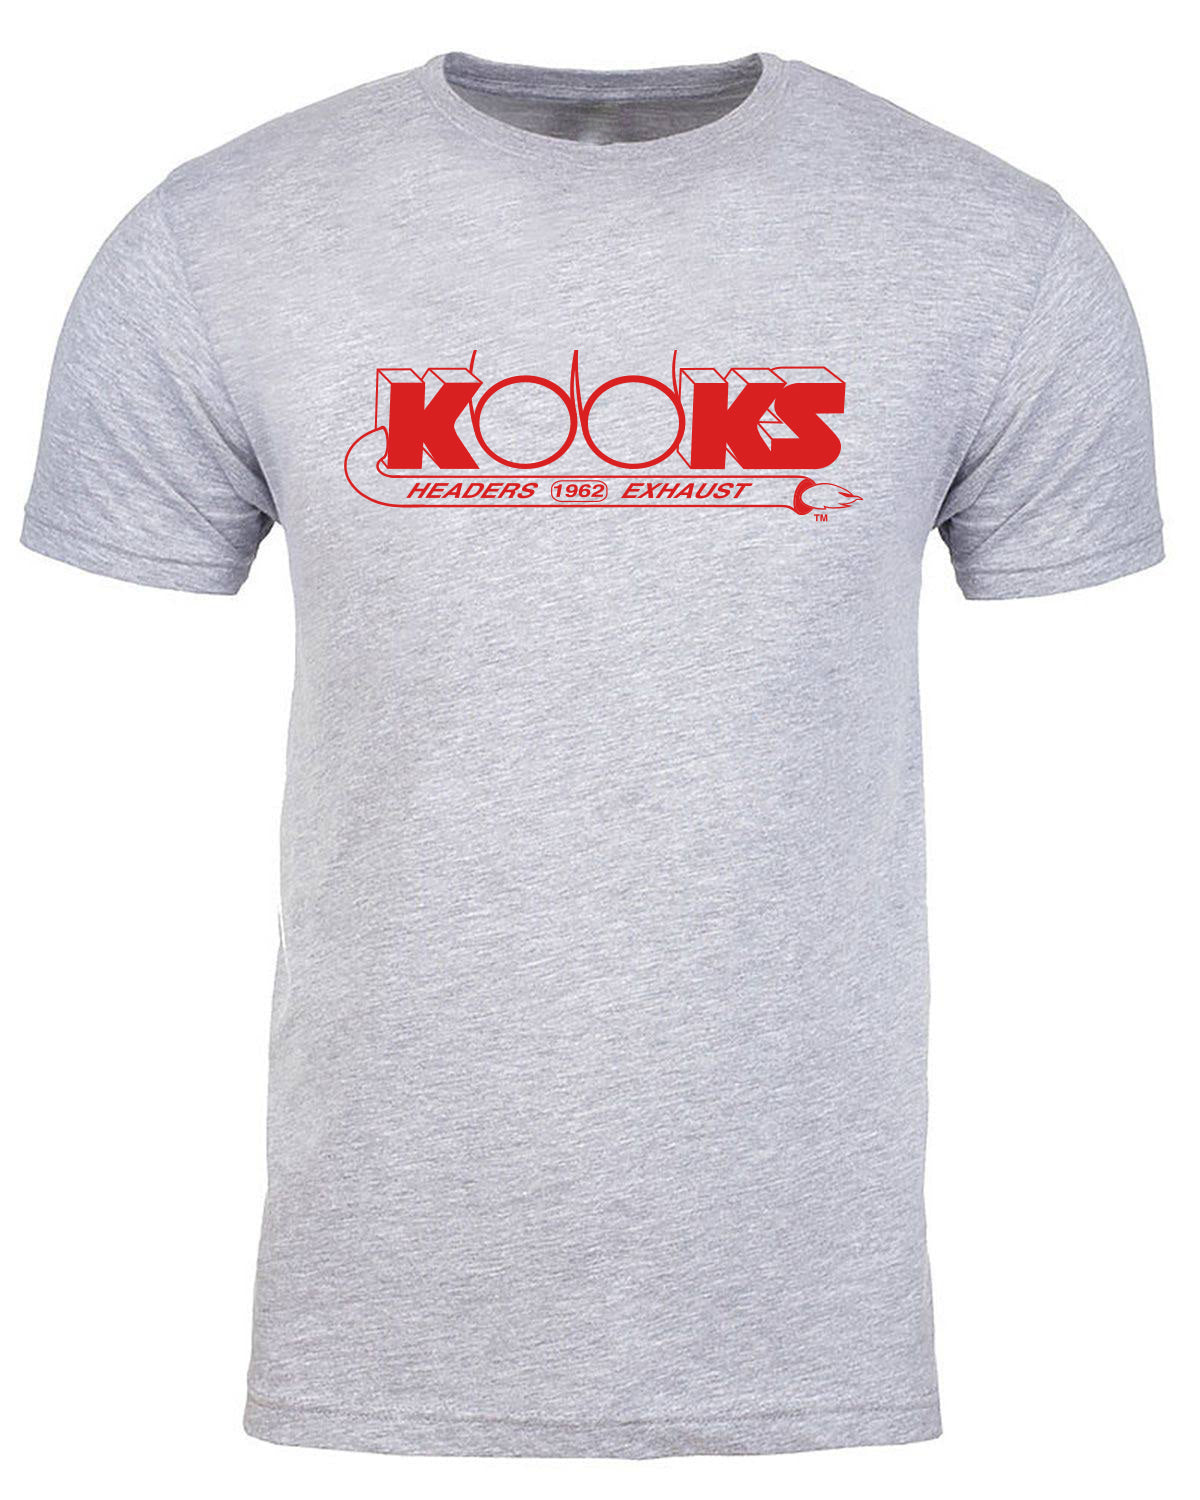 Kooks Custom Headers T-Shirt TS-100647-00